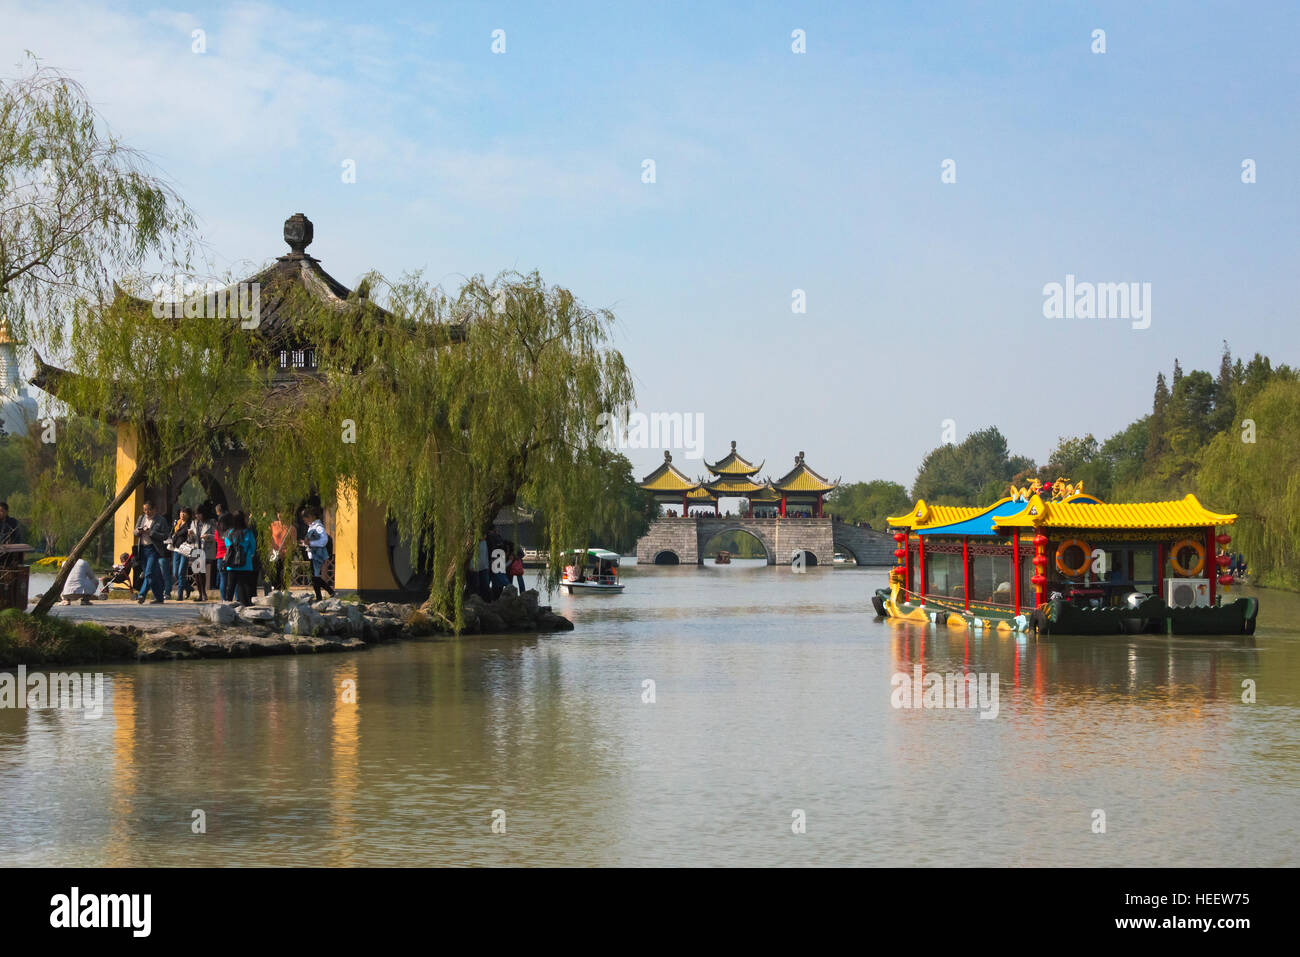 Pavilion and tourist boat on Slim West Lake, Lotus Bridge (also called Five Pagoda) Bridge in the distance, Yangzhou, Jiangsu, China Stock Photo